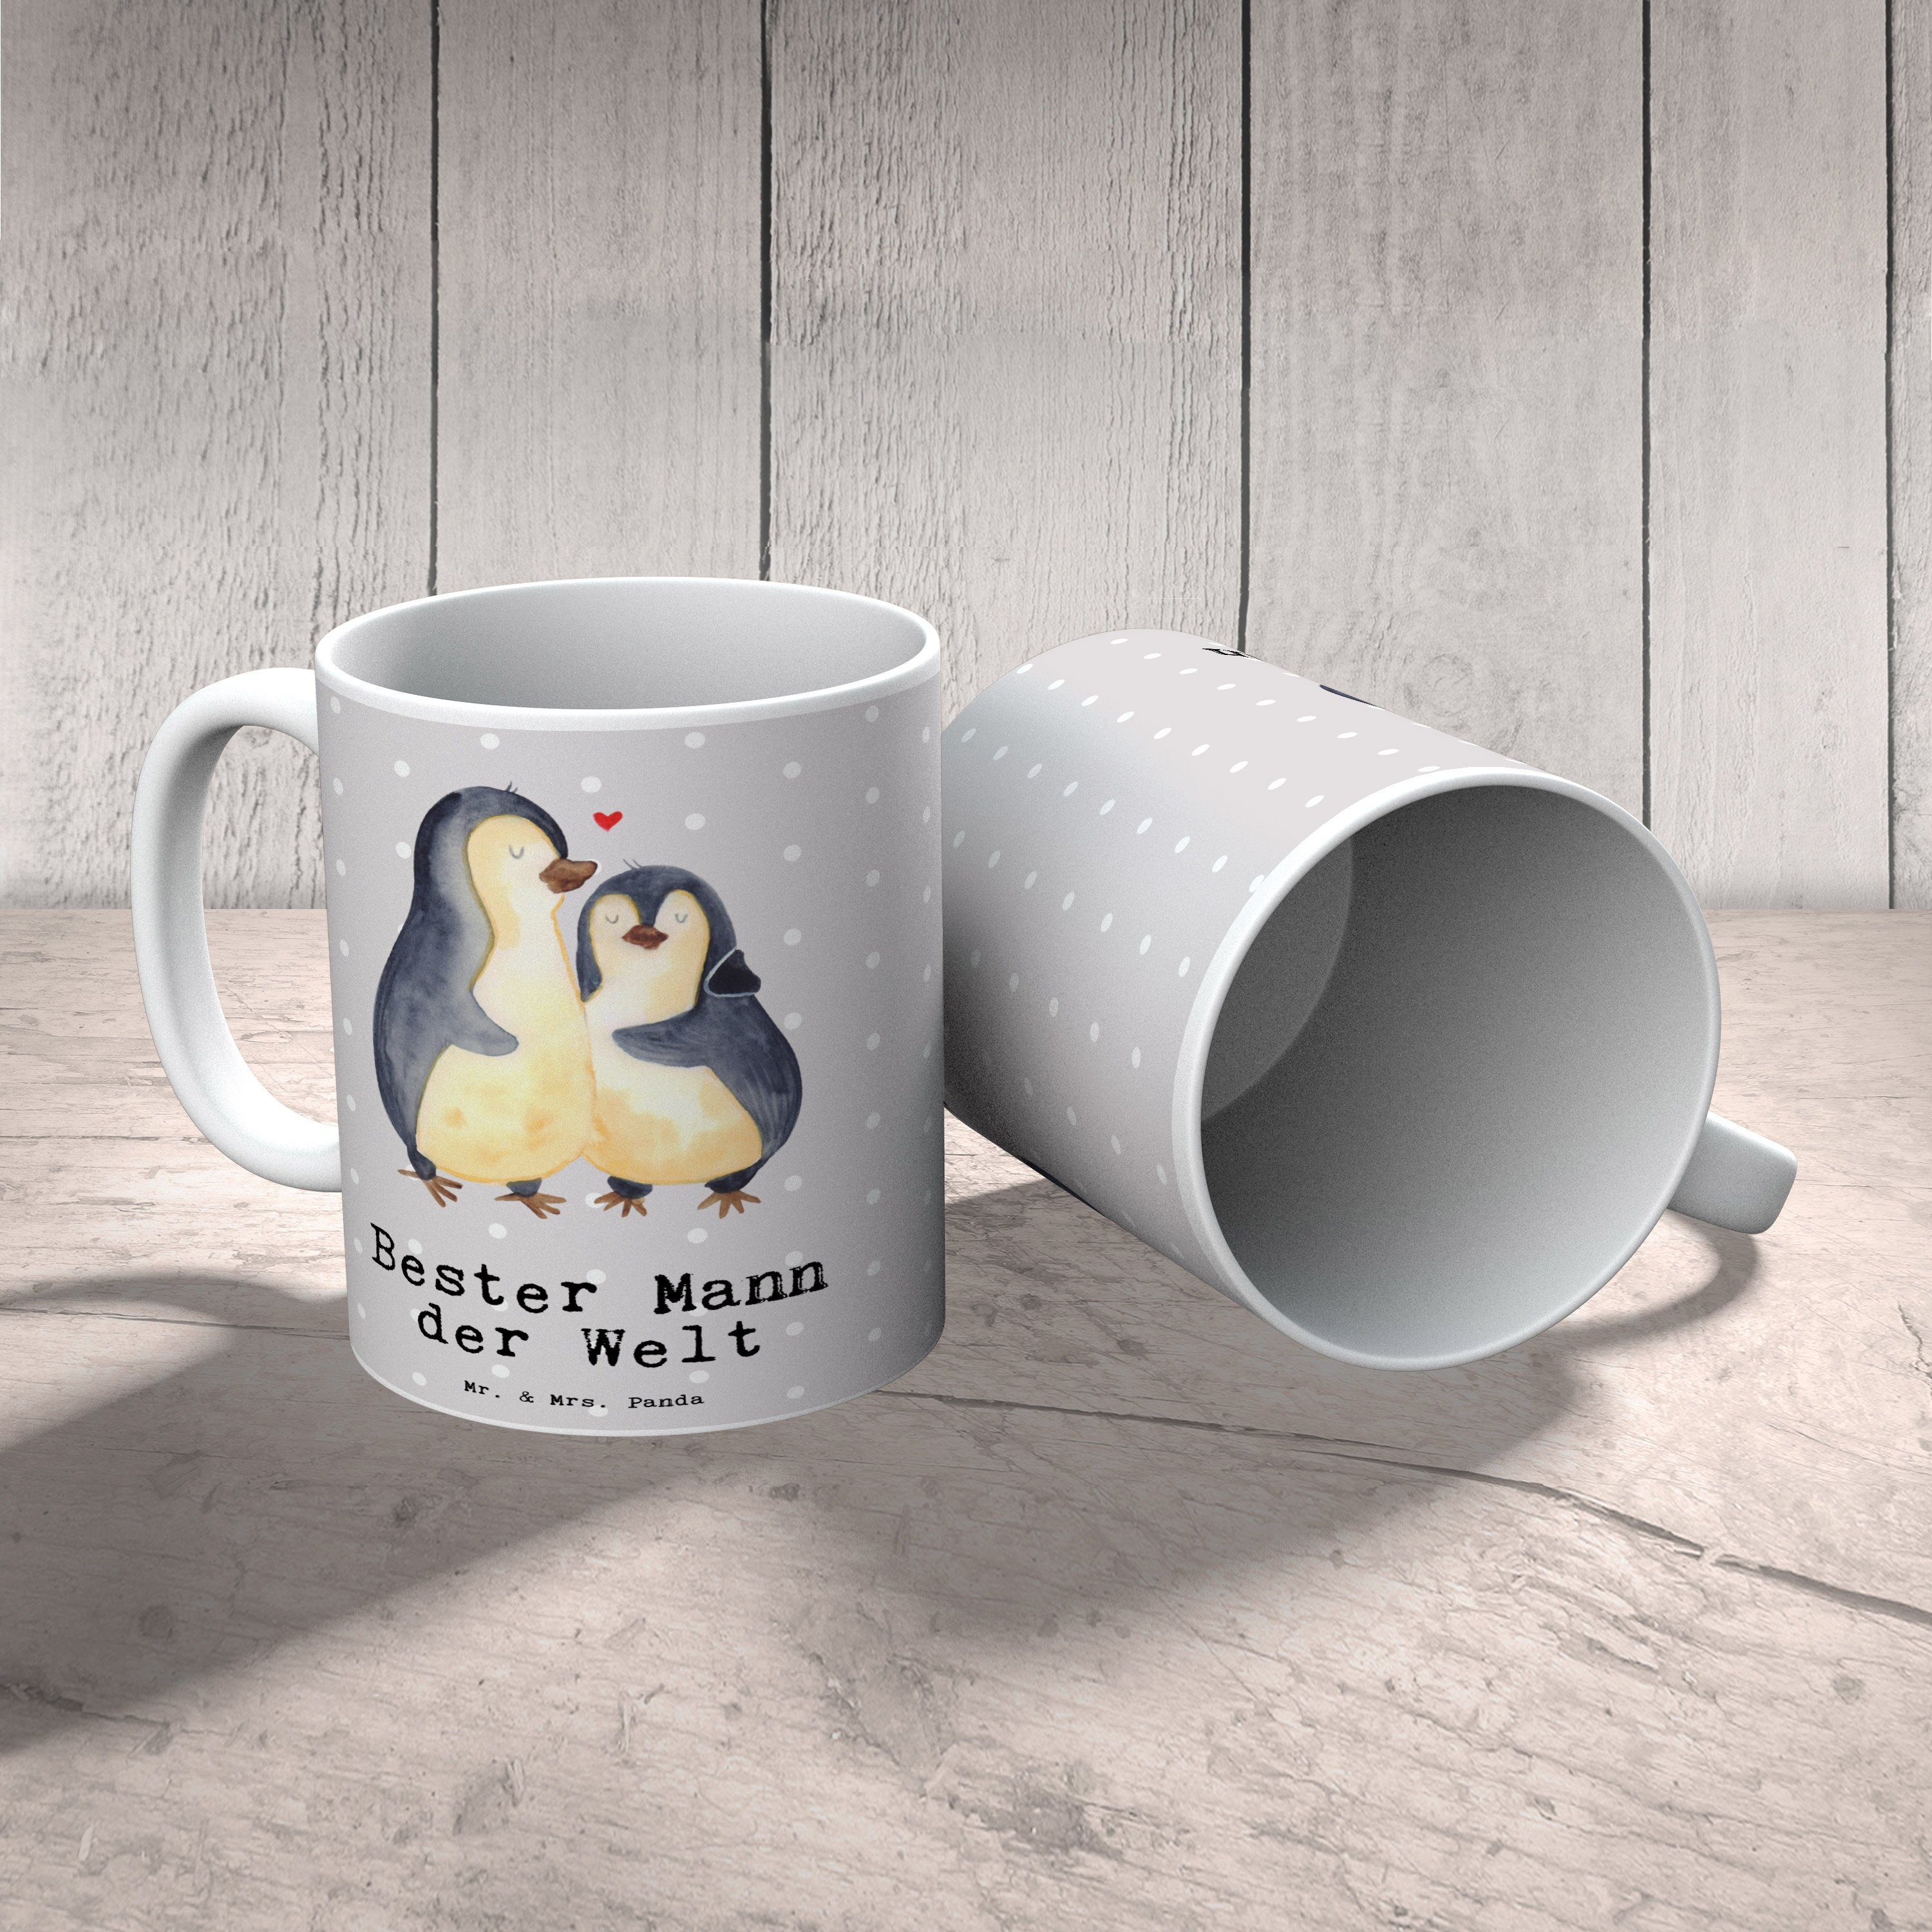 Mr. & Mrs. Panda der Lebensgefährt, - - Geschenk, Pinguin Pastell Grau Bester Keramik Mann Welt Tasse